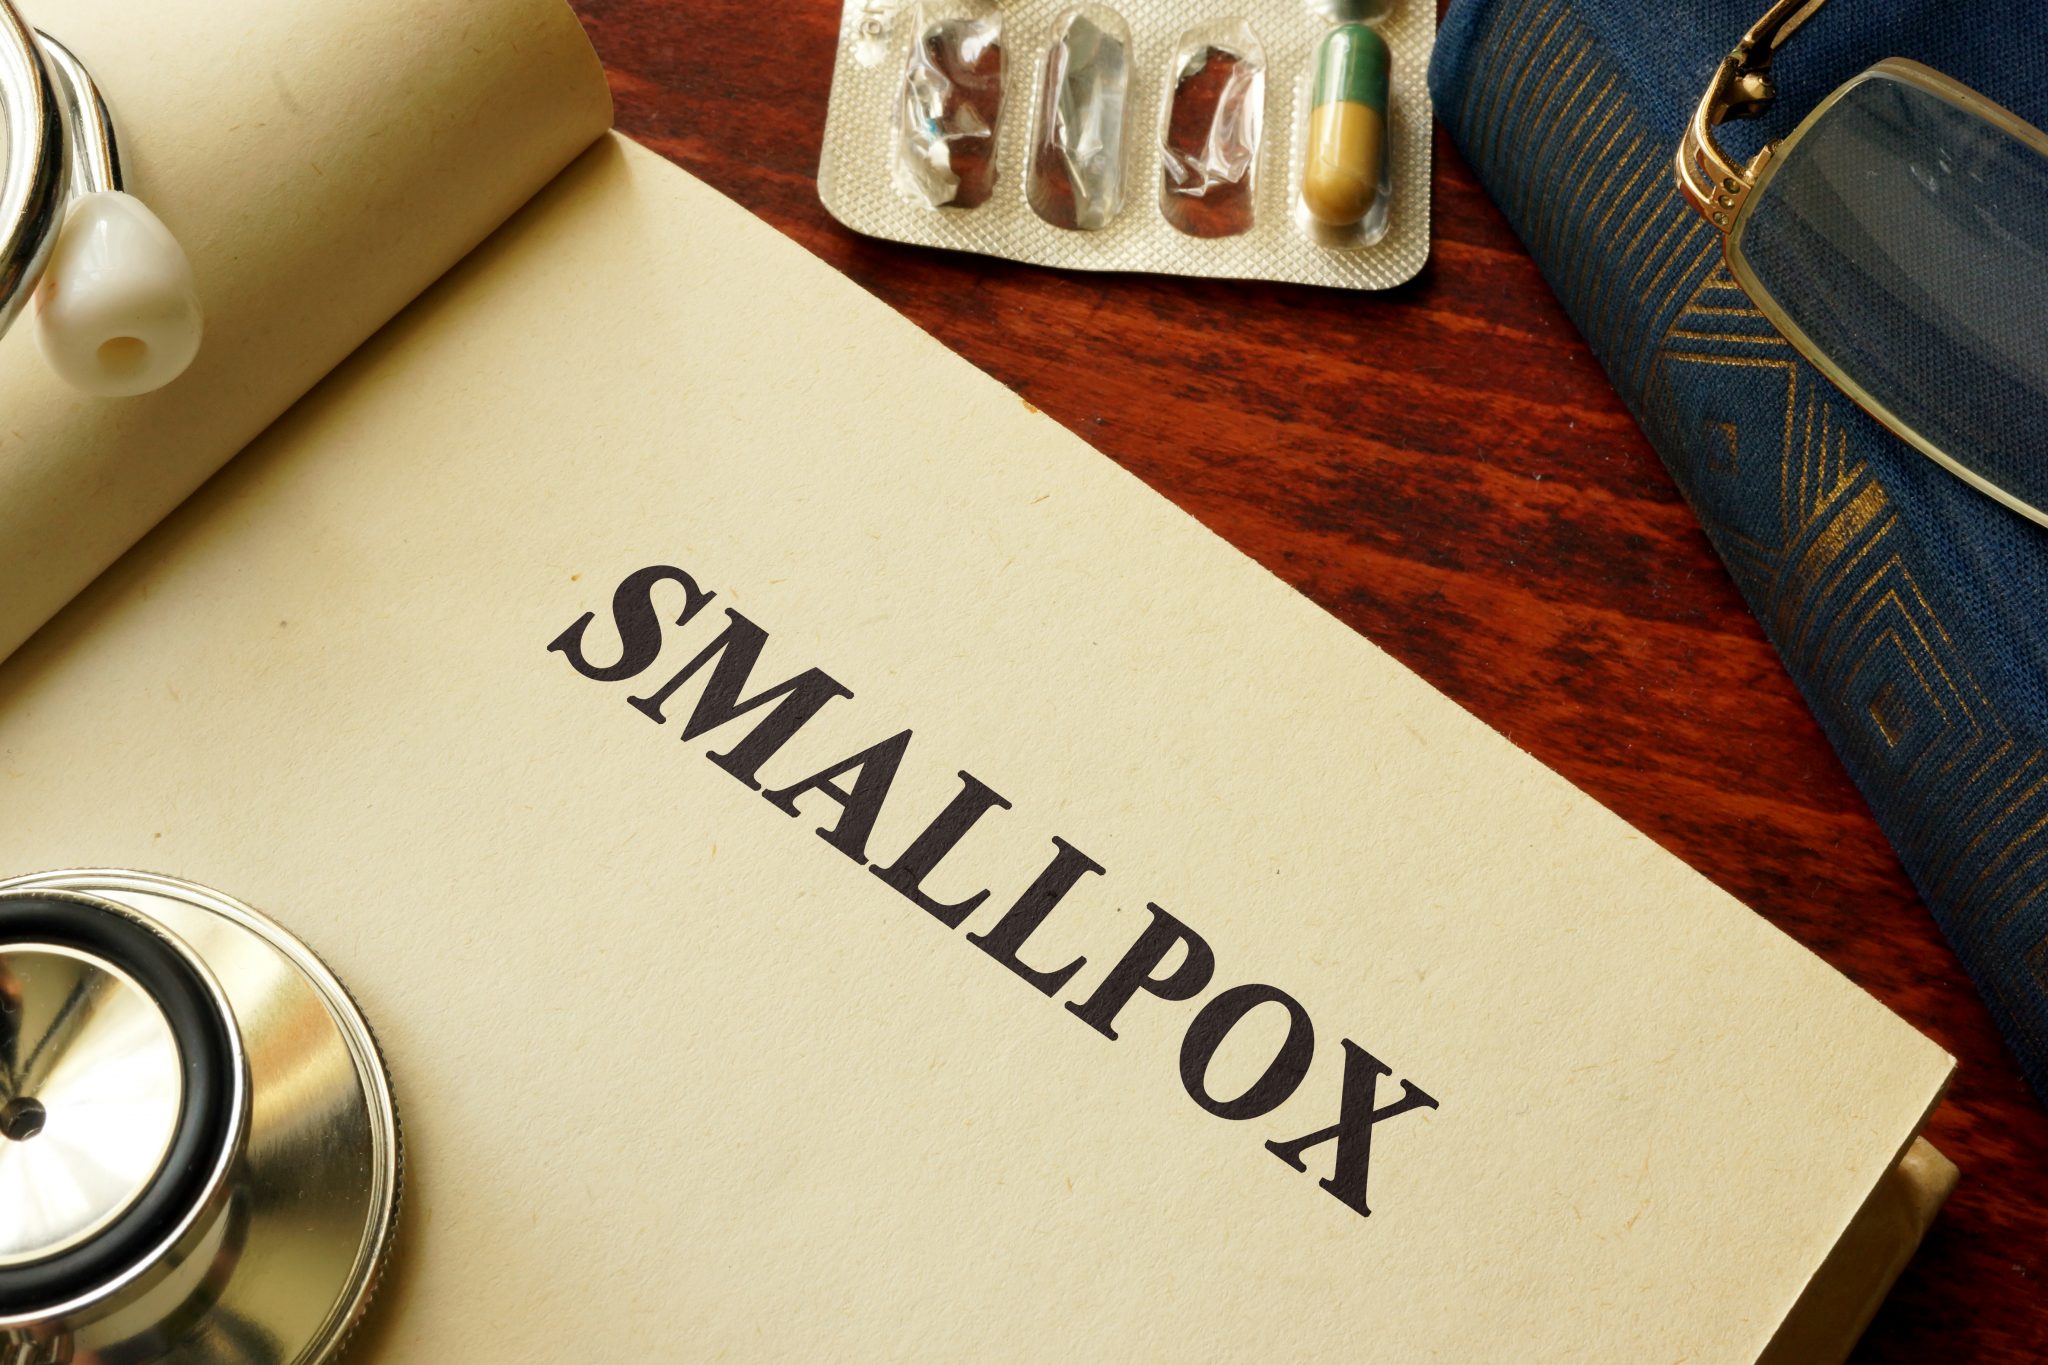  Smallpox: Threat or False Flag? A Telling Timeline